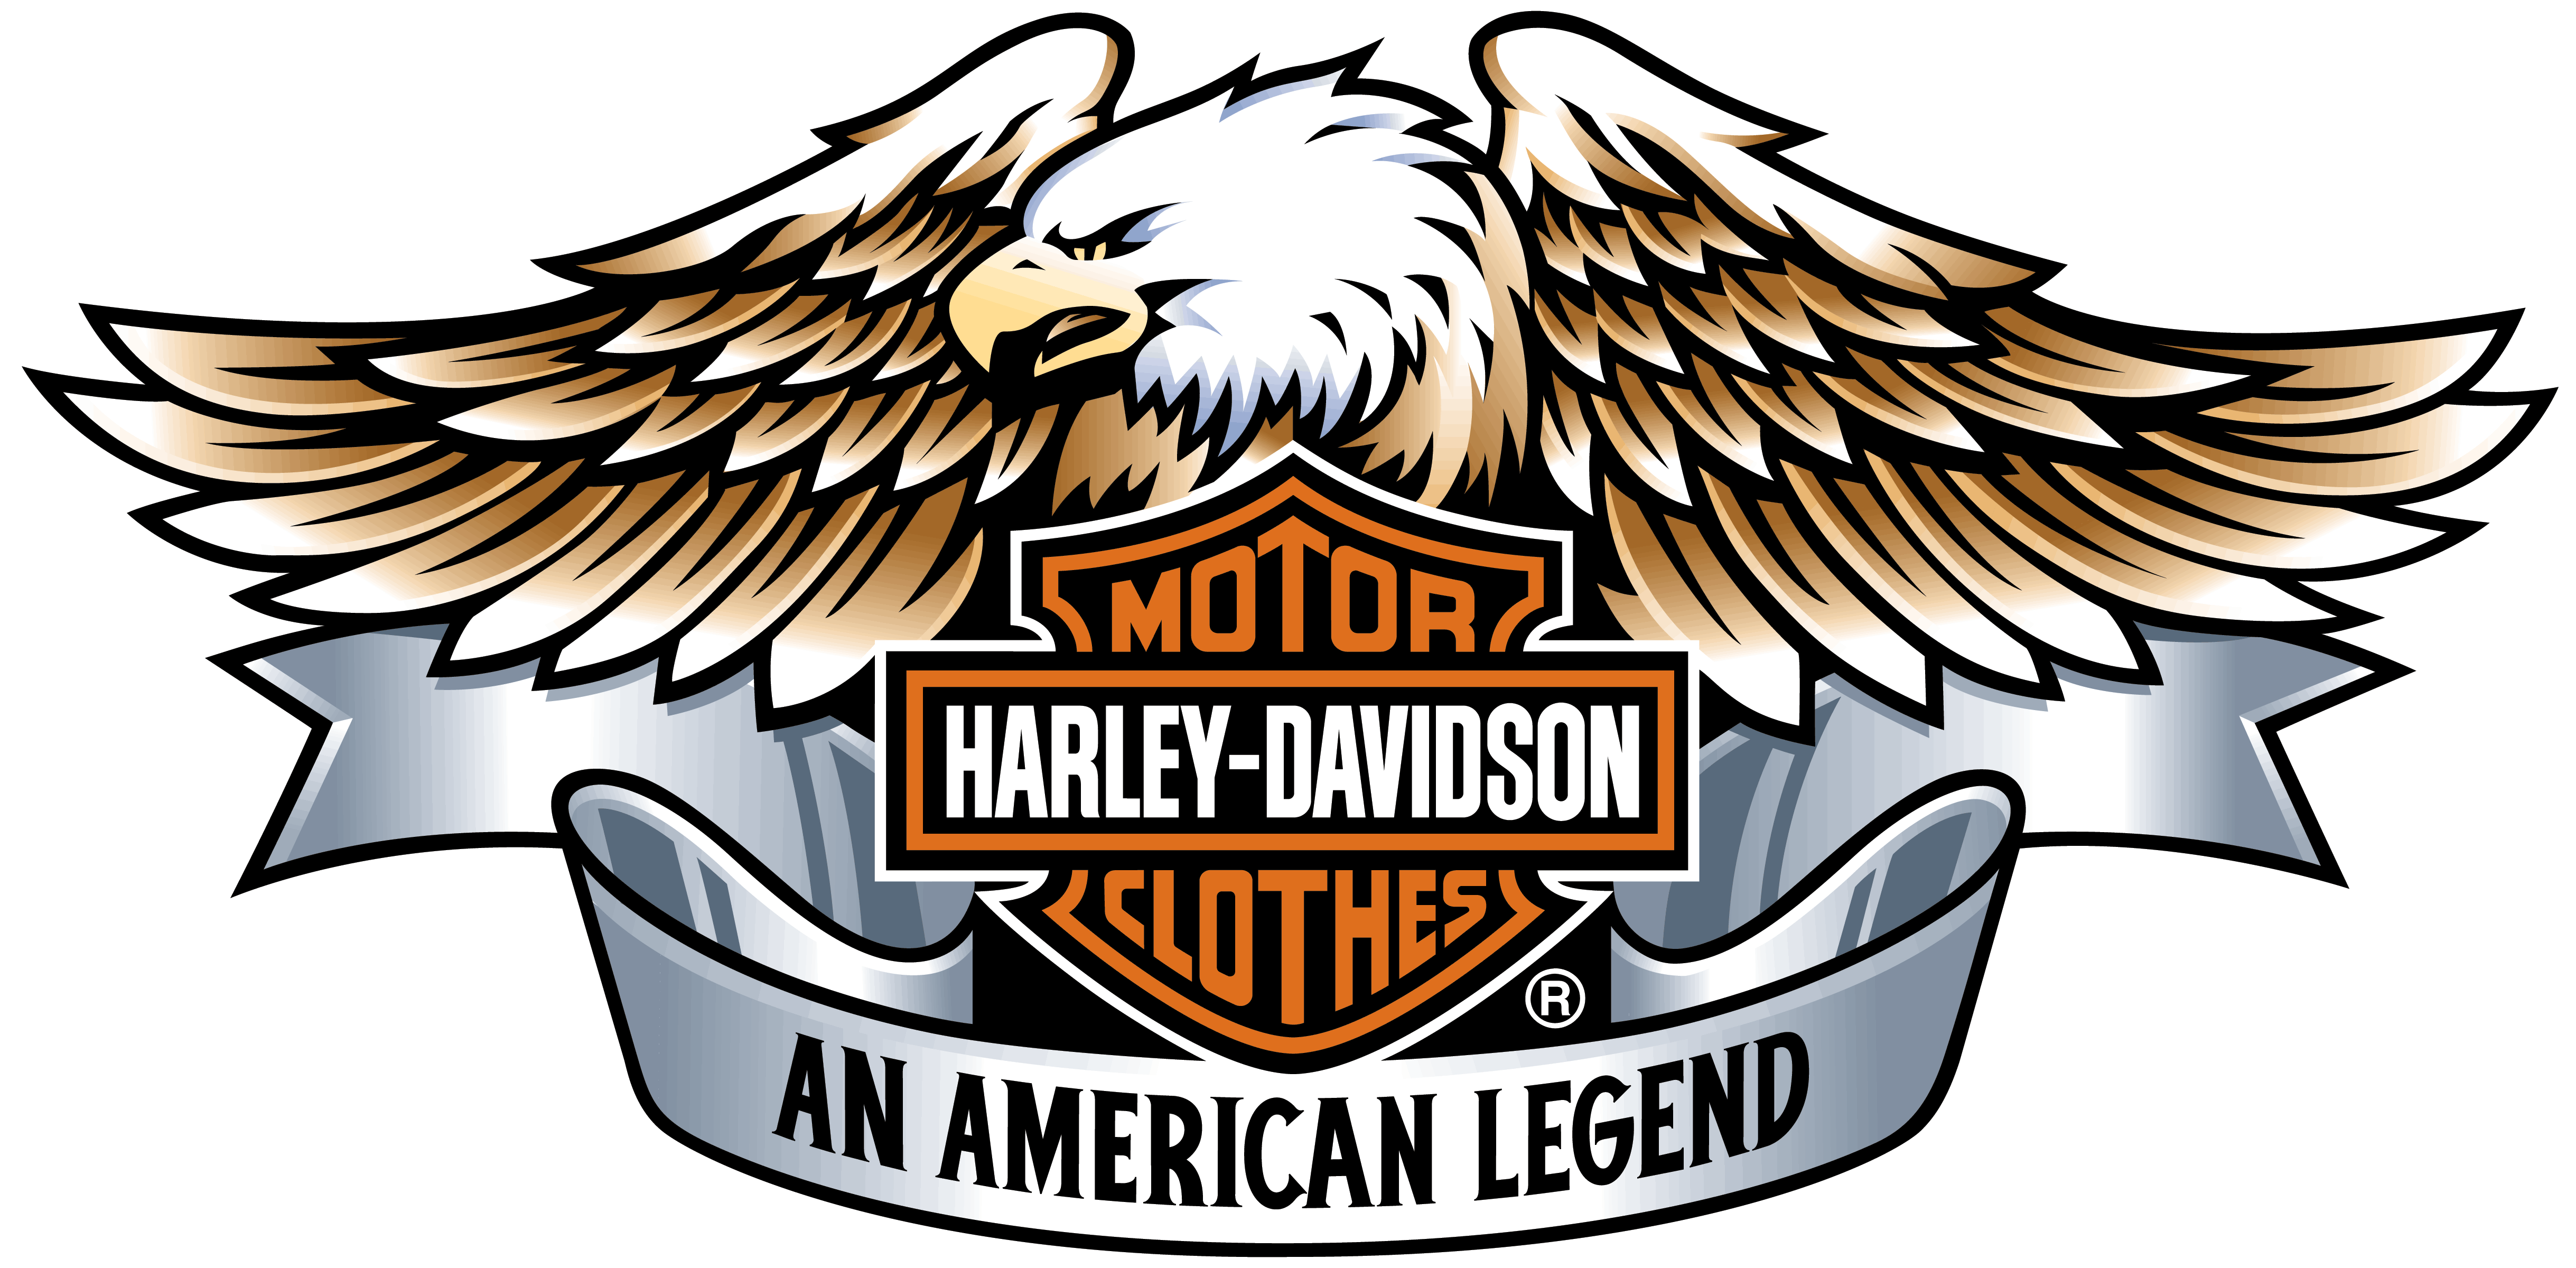 Harley Davidson Flames Clip Art 1000 X 316 204 Kb Jpeg | Top 